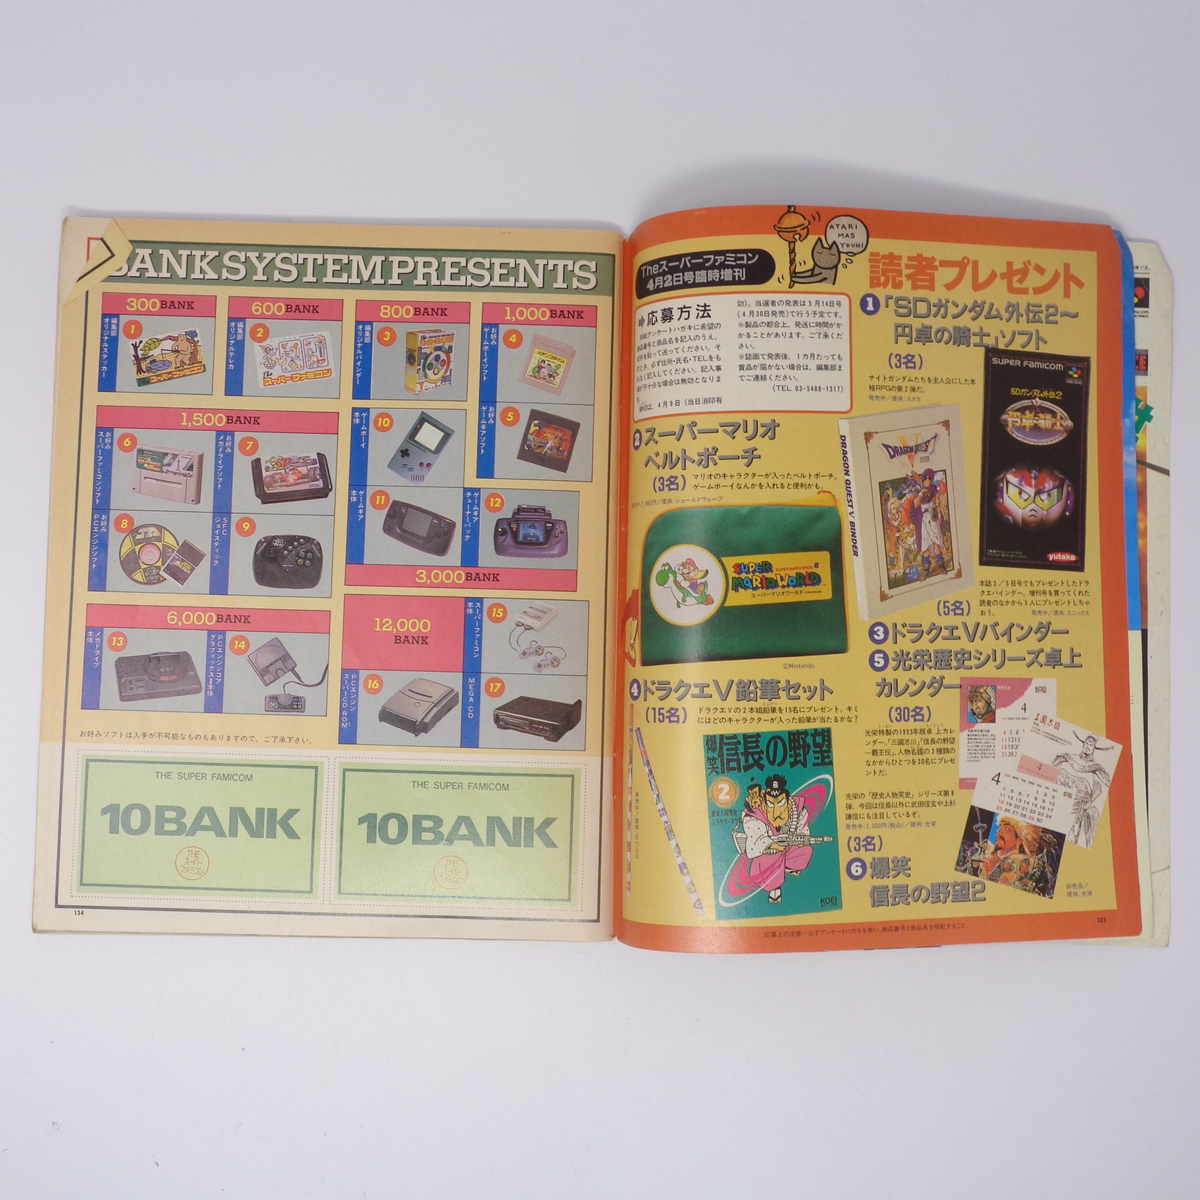 The SuperFamicom 1993年4月2日臨時増刊号 NO.2 別冊付録無し /スターフォックス/Theスーパーファミコン/ゲーム雑誌[Free Shipping]